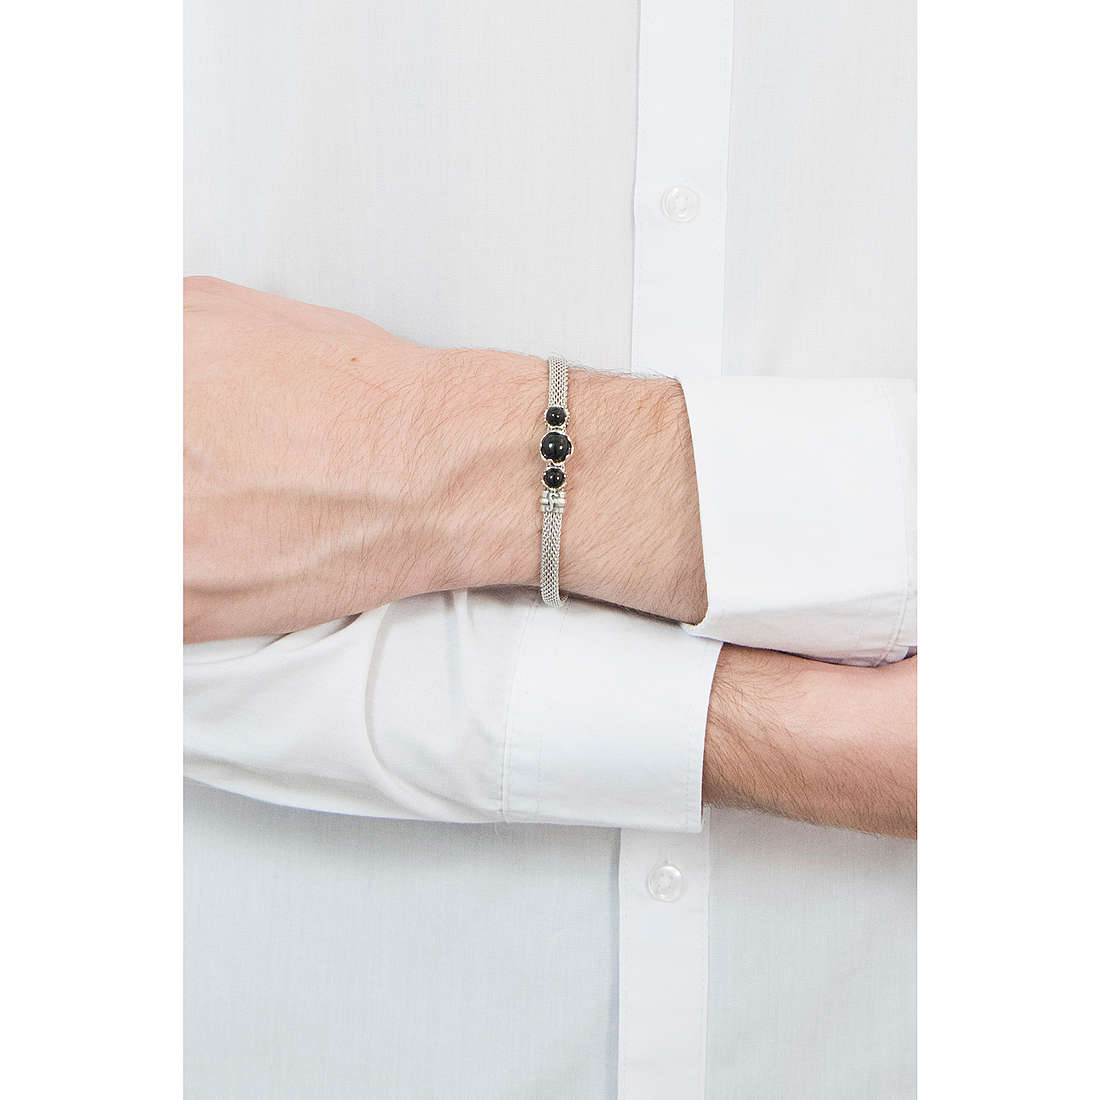 Cesare Paciotti bracelets Black Bezel man JPBR1452V wearing